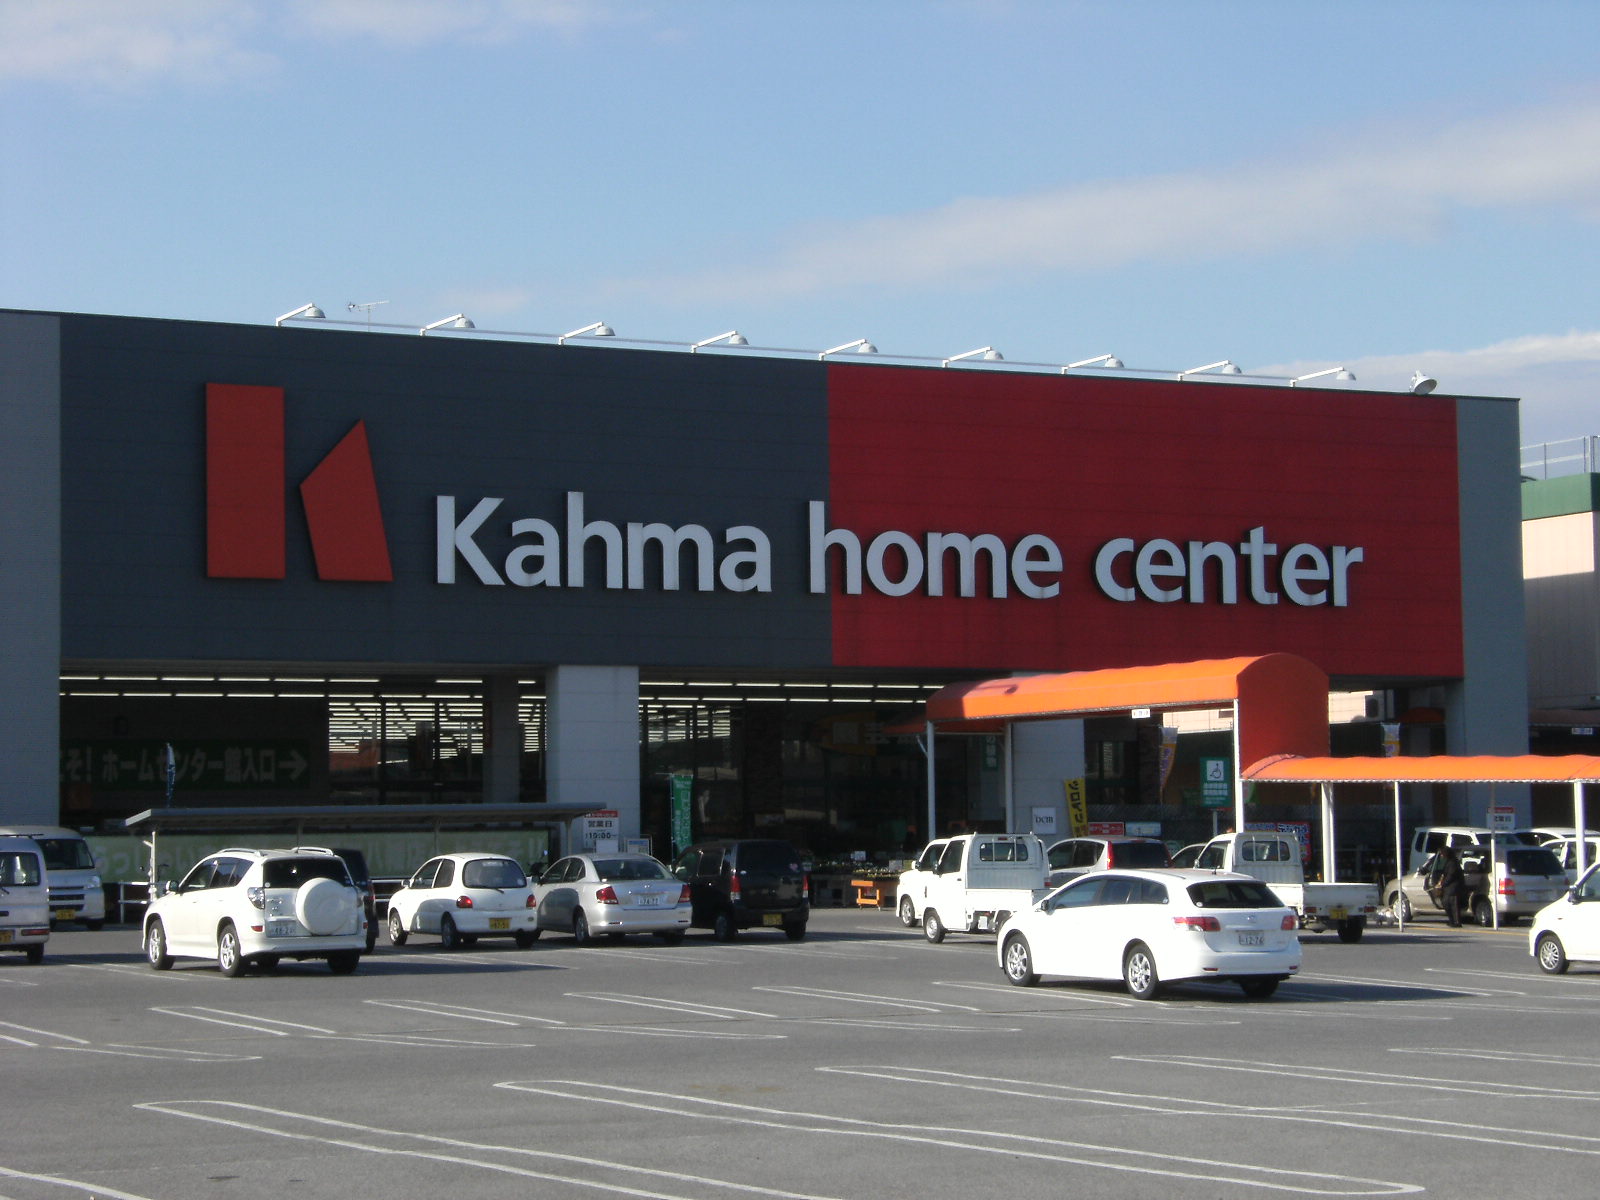 Home center. 300m to Kama hardware store (hardware store)